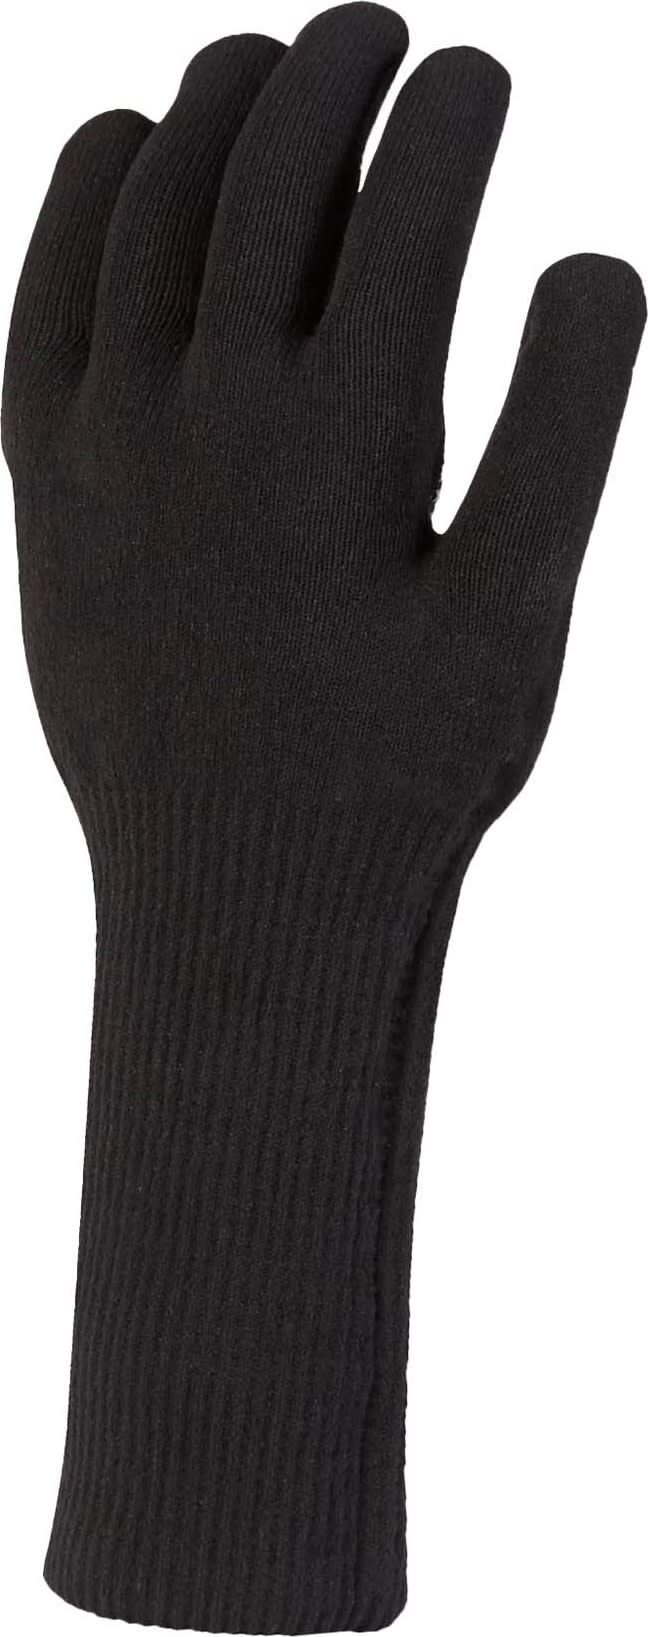 Waterproof All Weather Ultra Grip Knitted Gauntlet Black Sealskinz